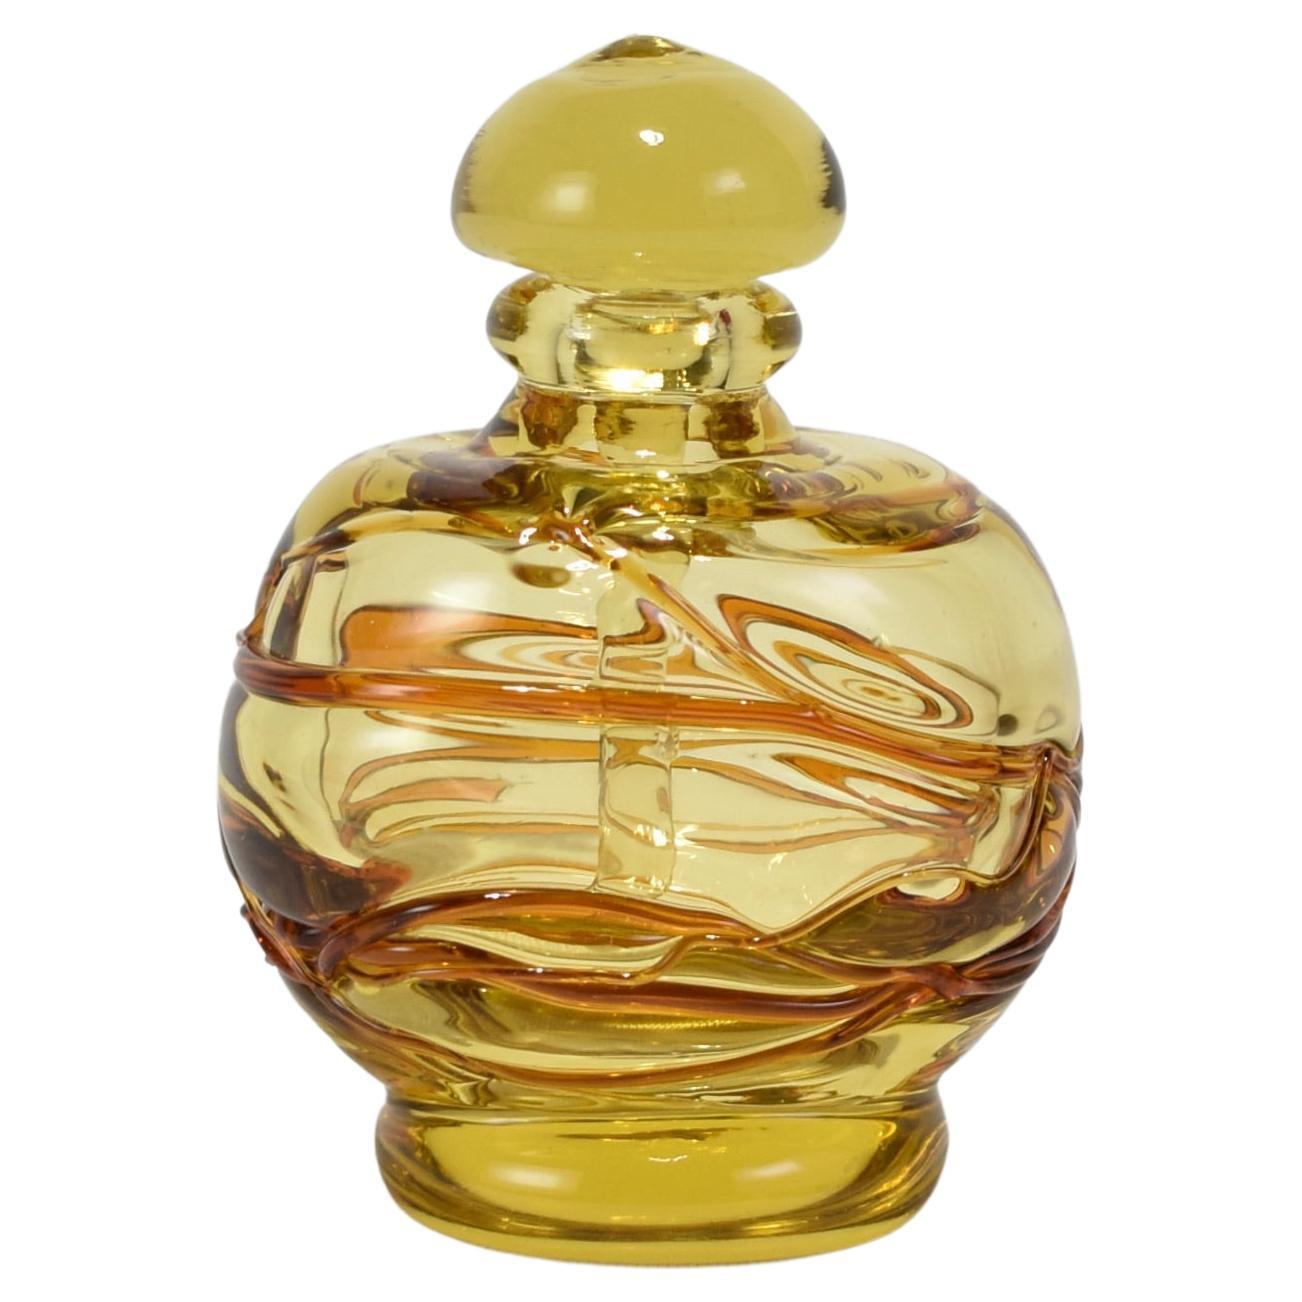 Italian Glass Perfume Bottle